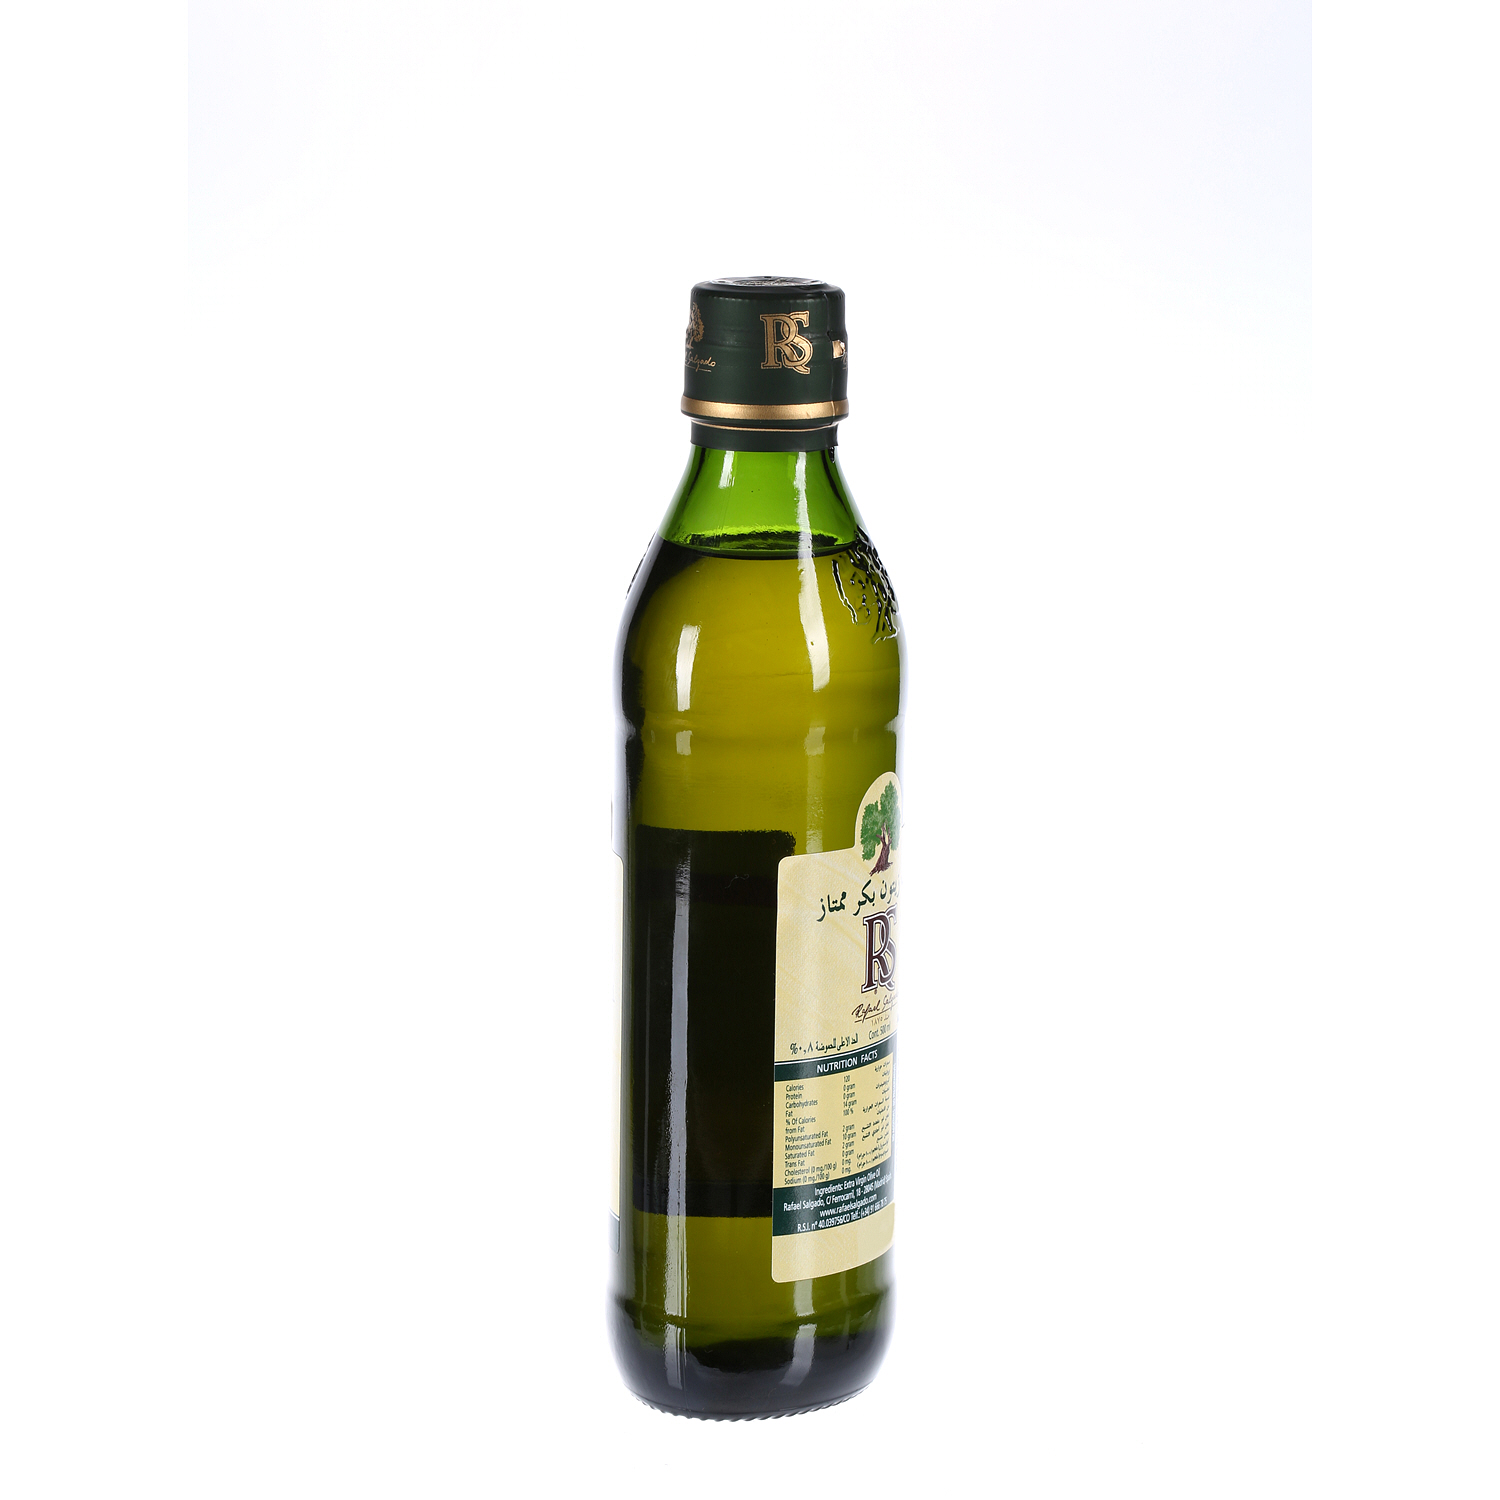 Rafael Salgado Extra Virgin Olive Oil 500 ml